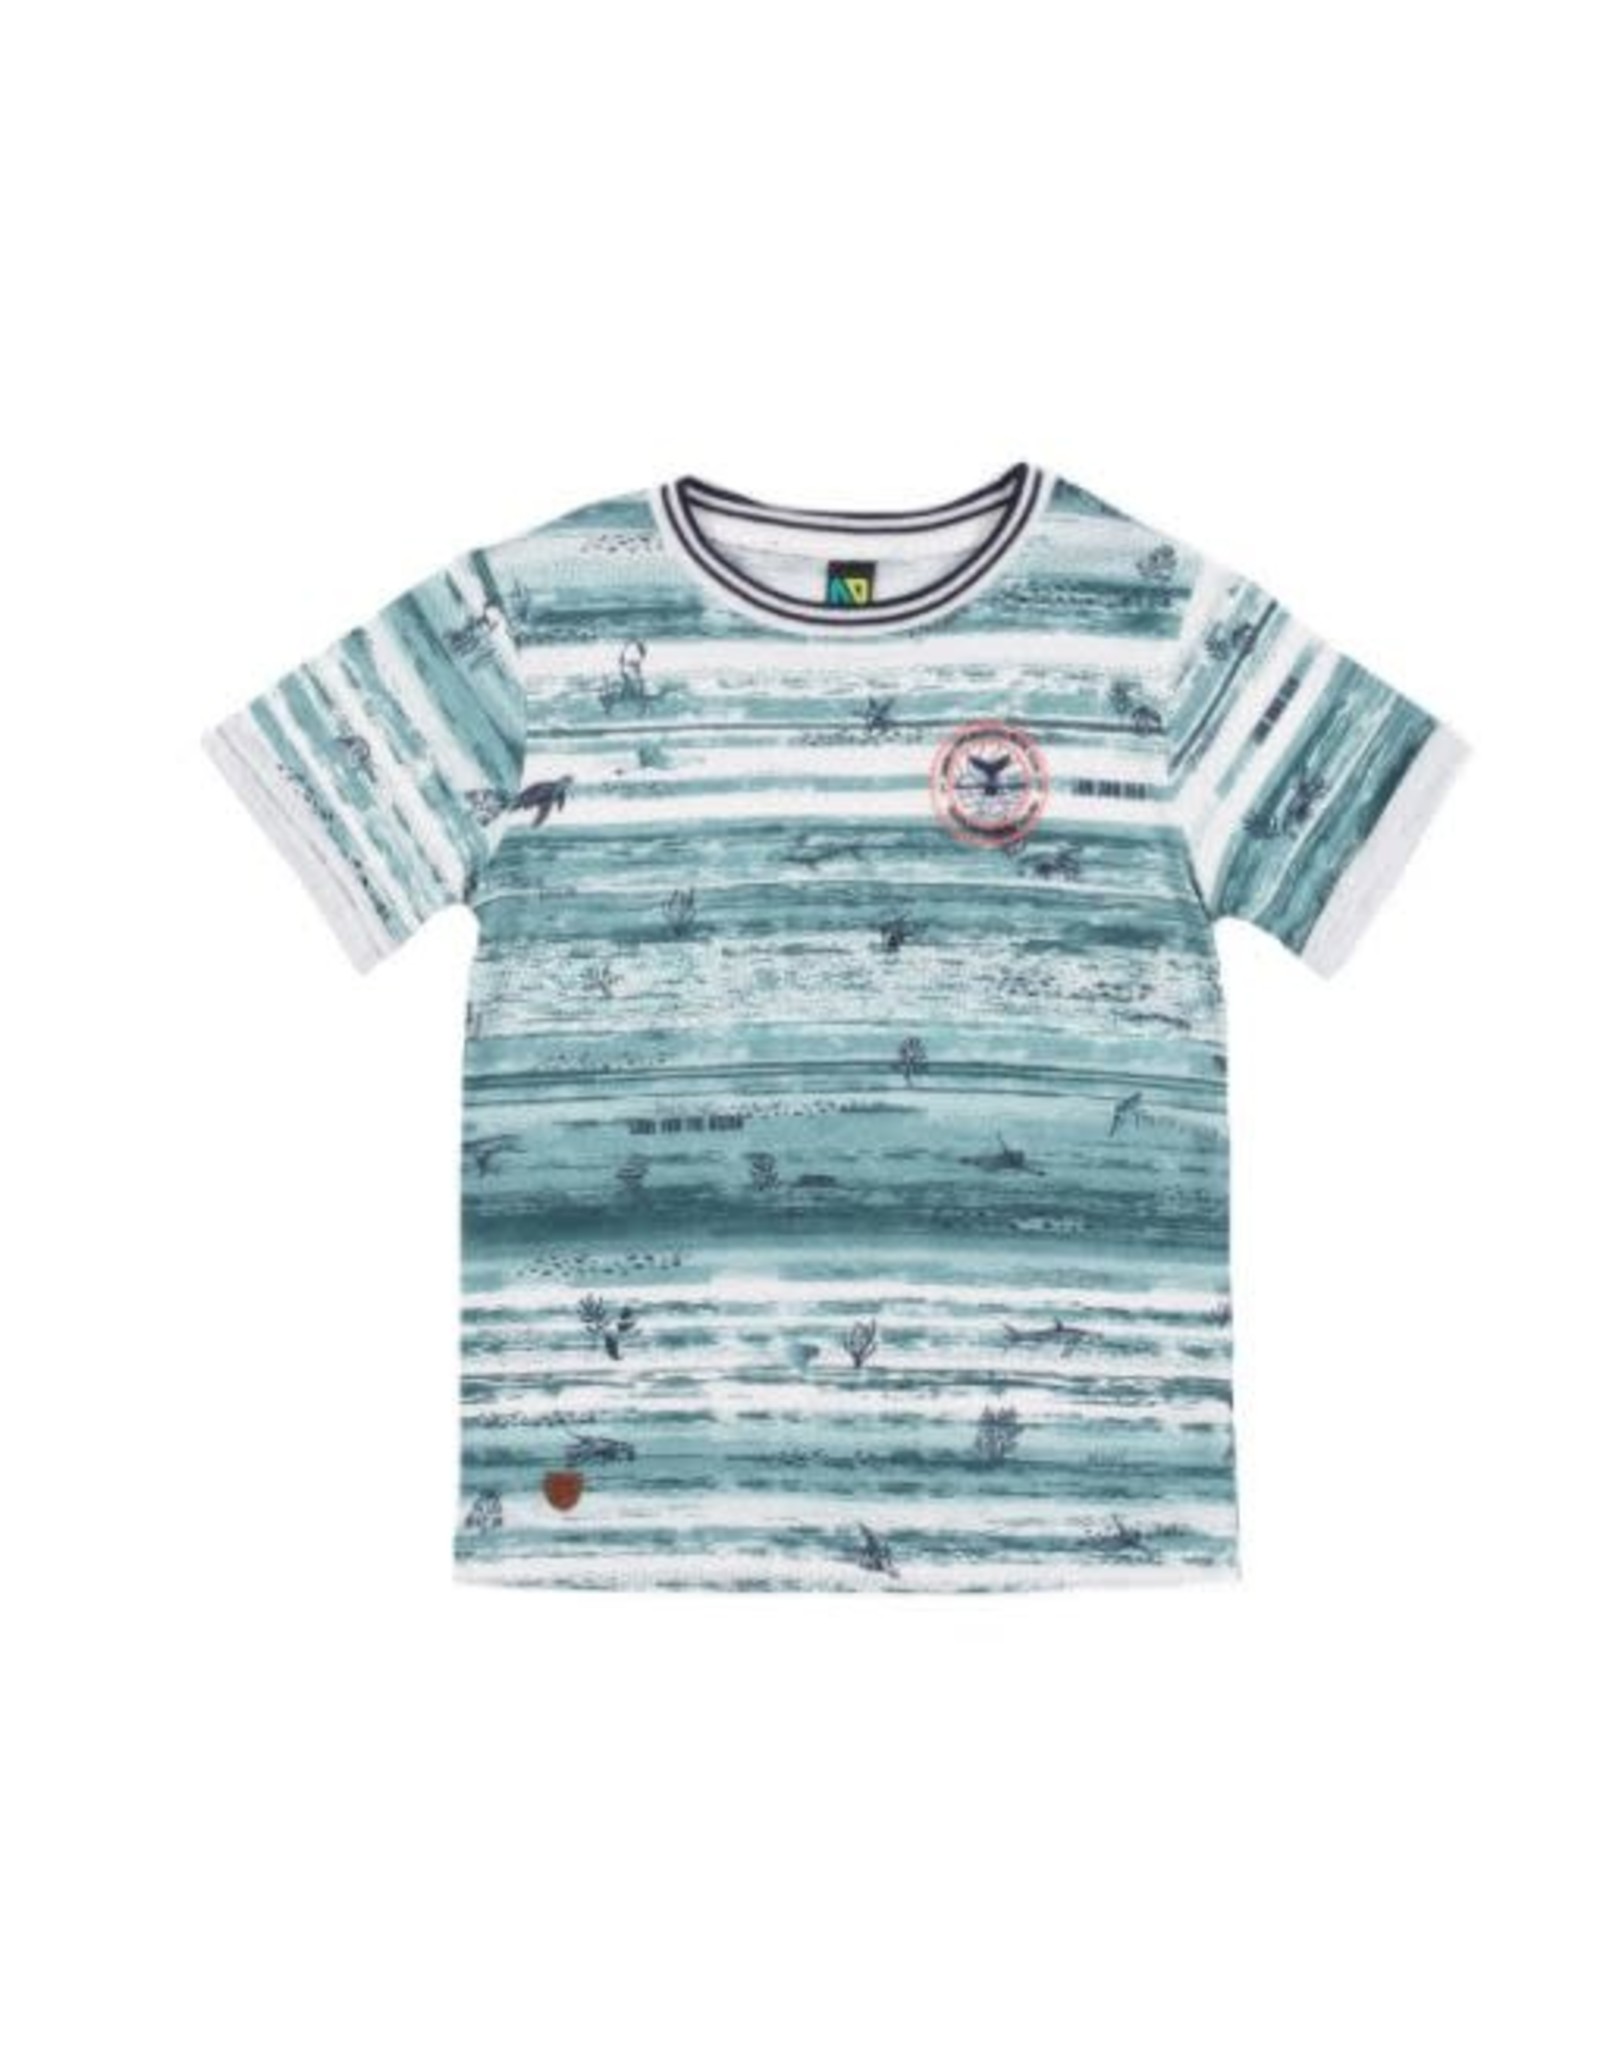 Noruk Ocean Adventure Pattern T-Shirt